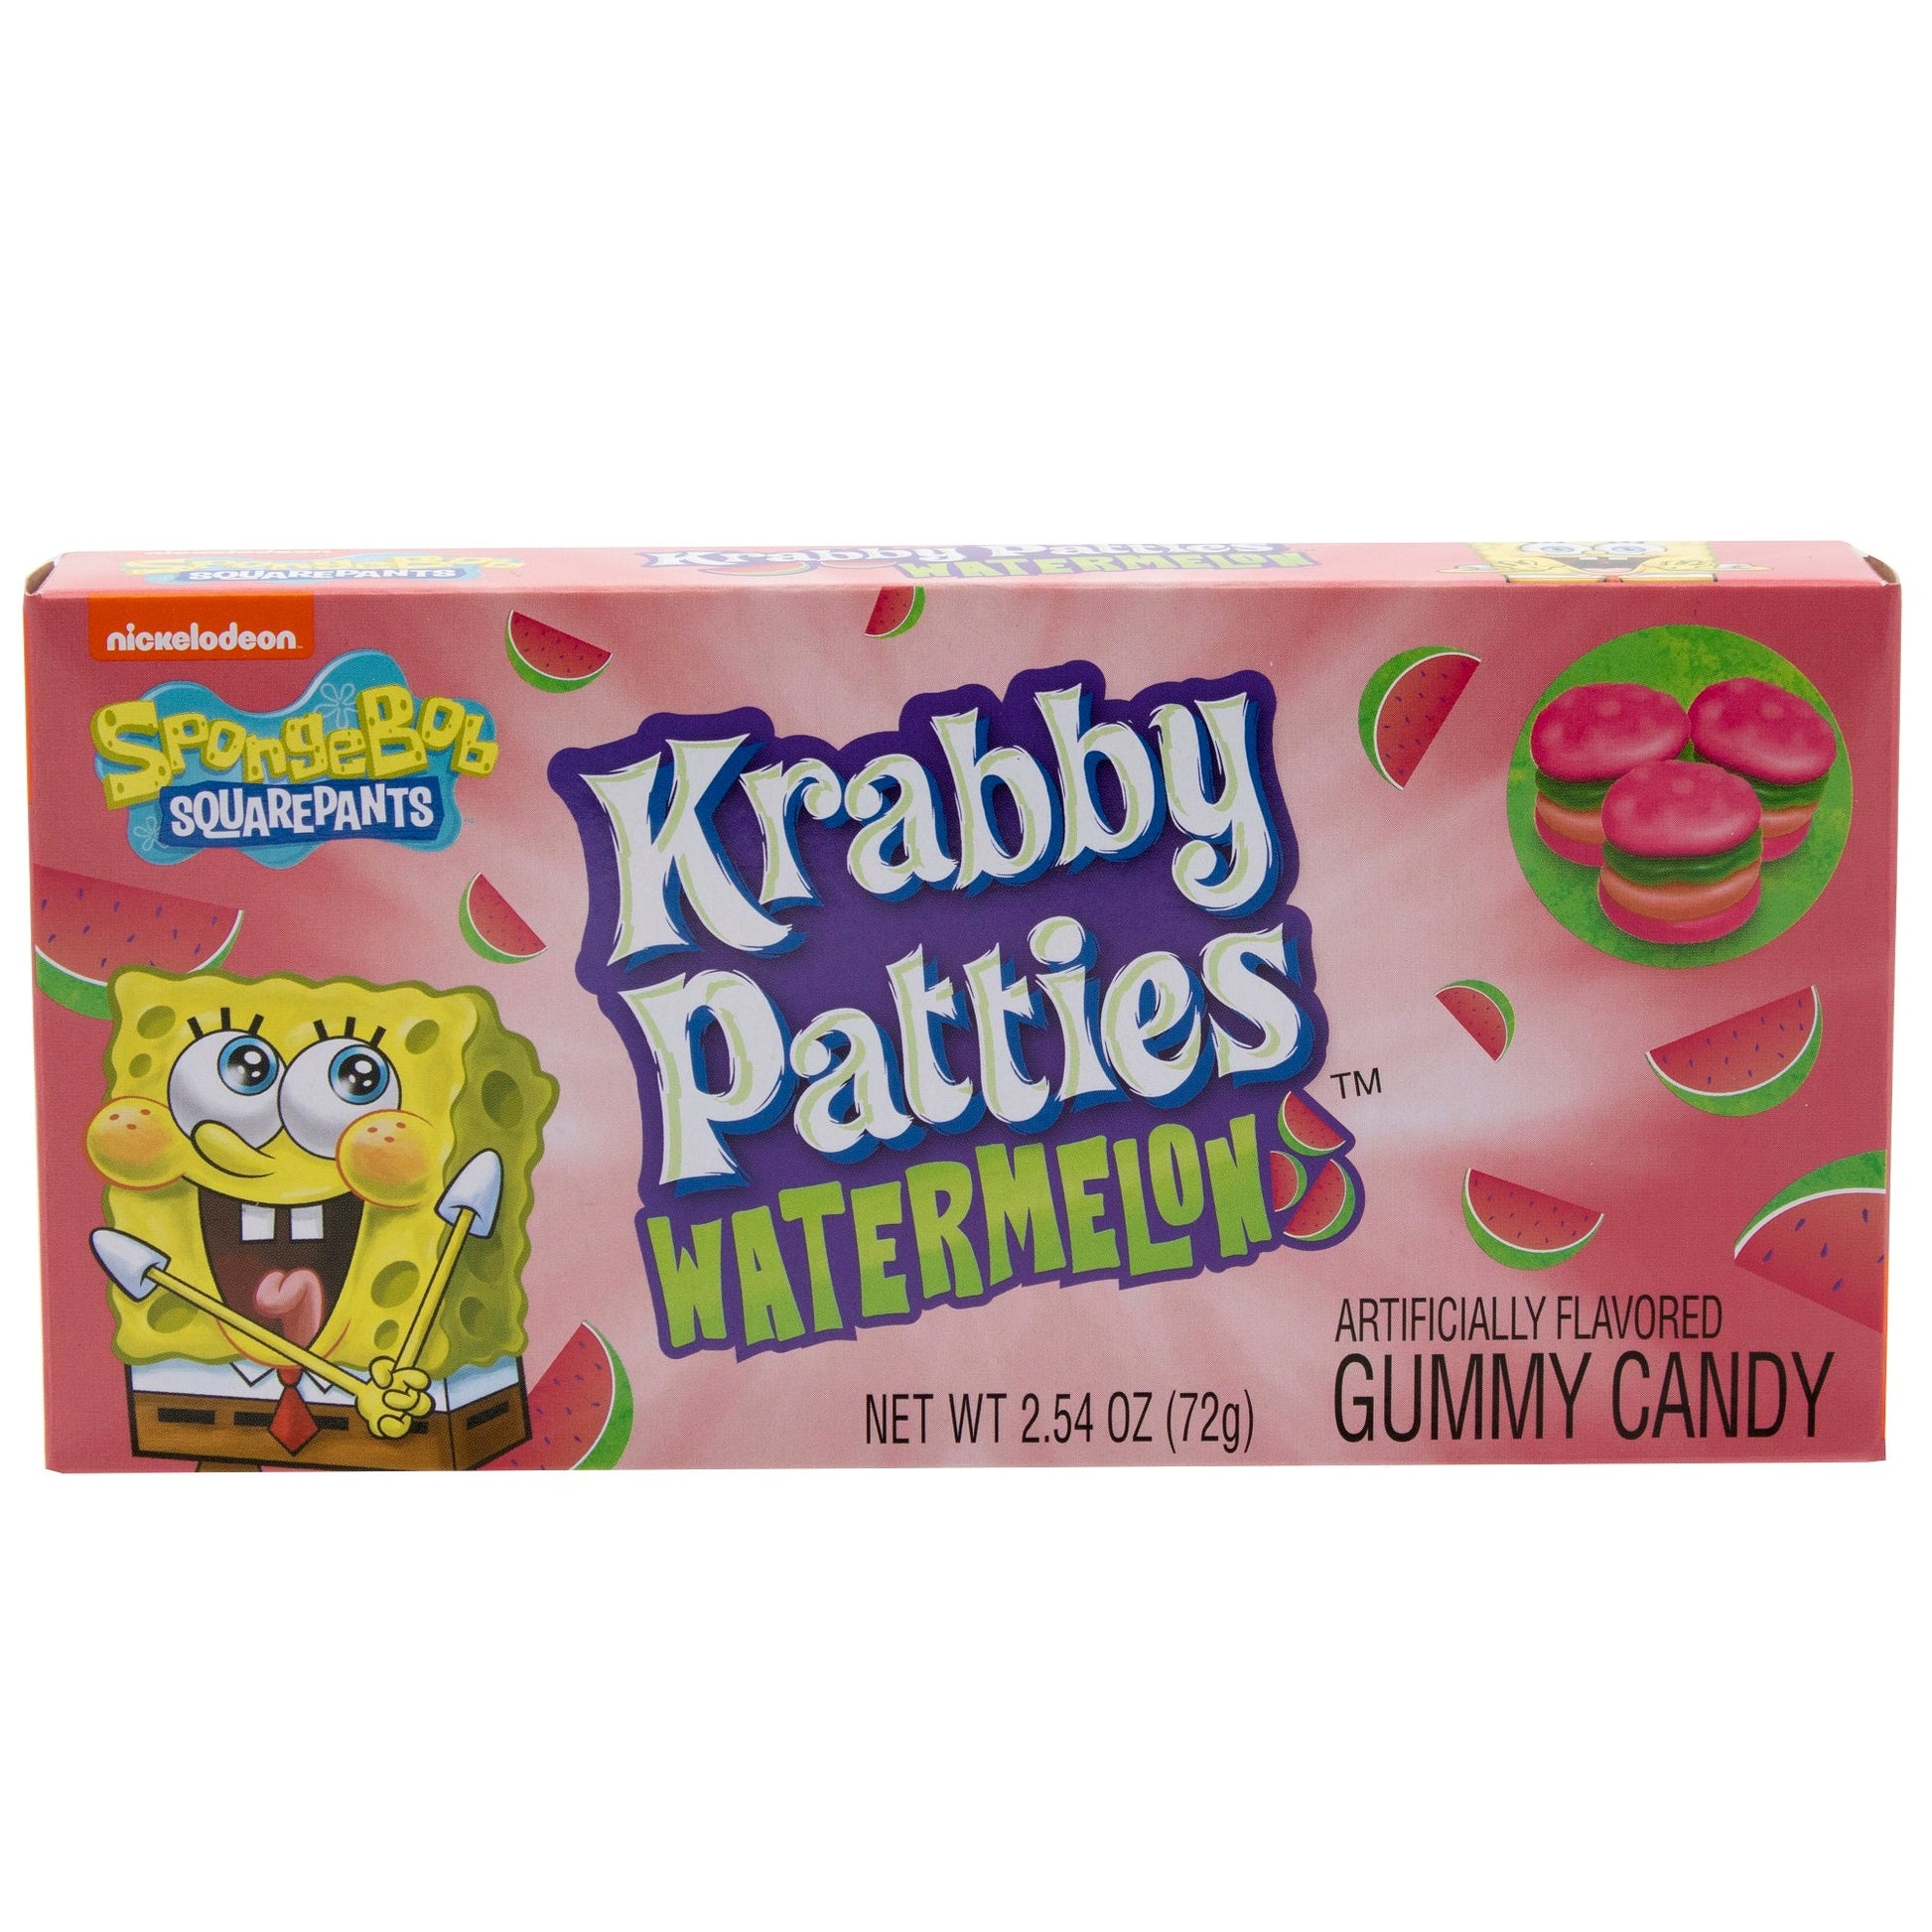 Krabby Patties Watermelon gummy candy packaging